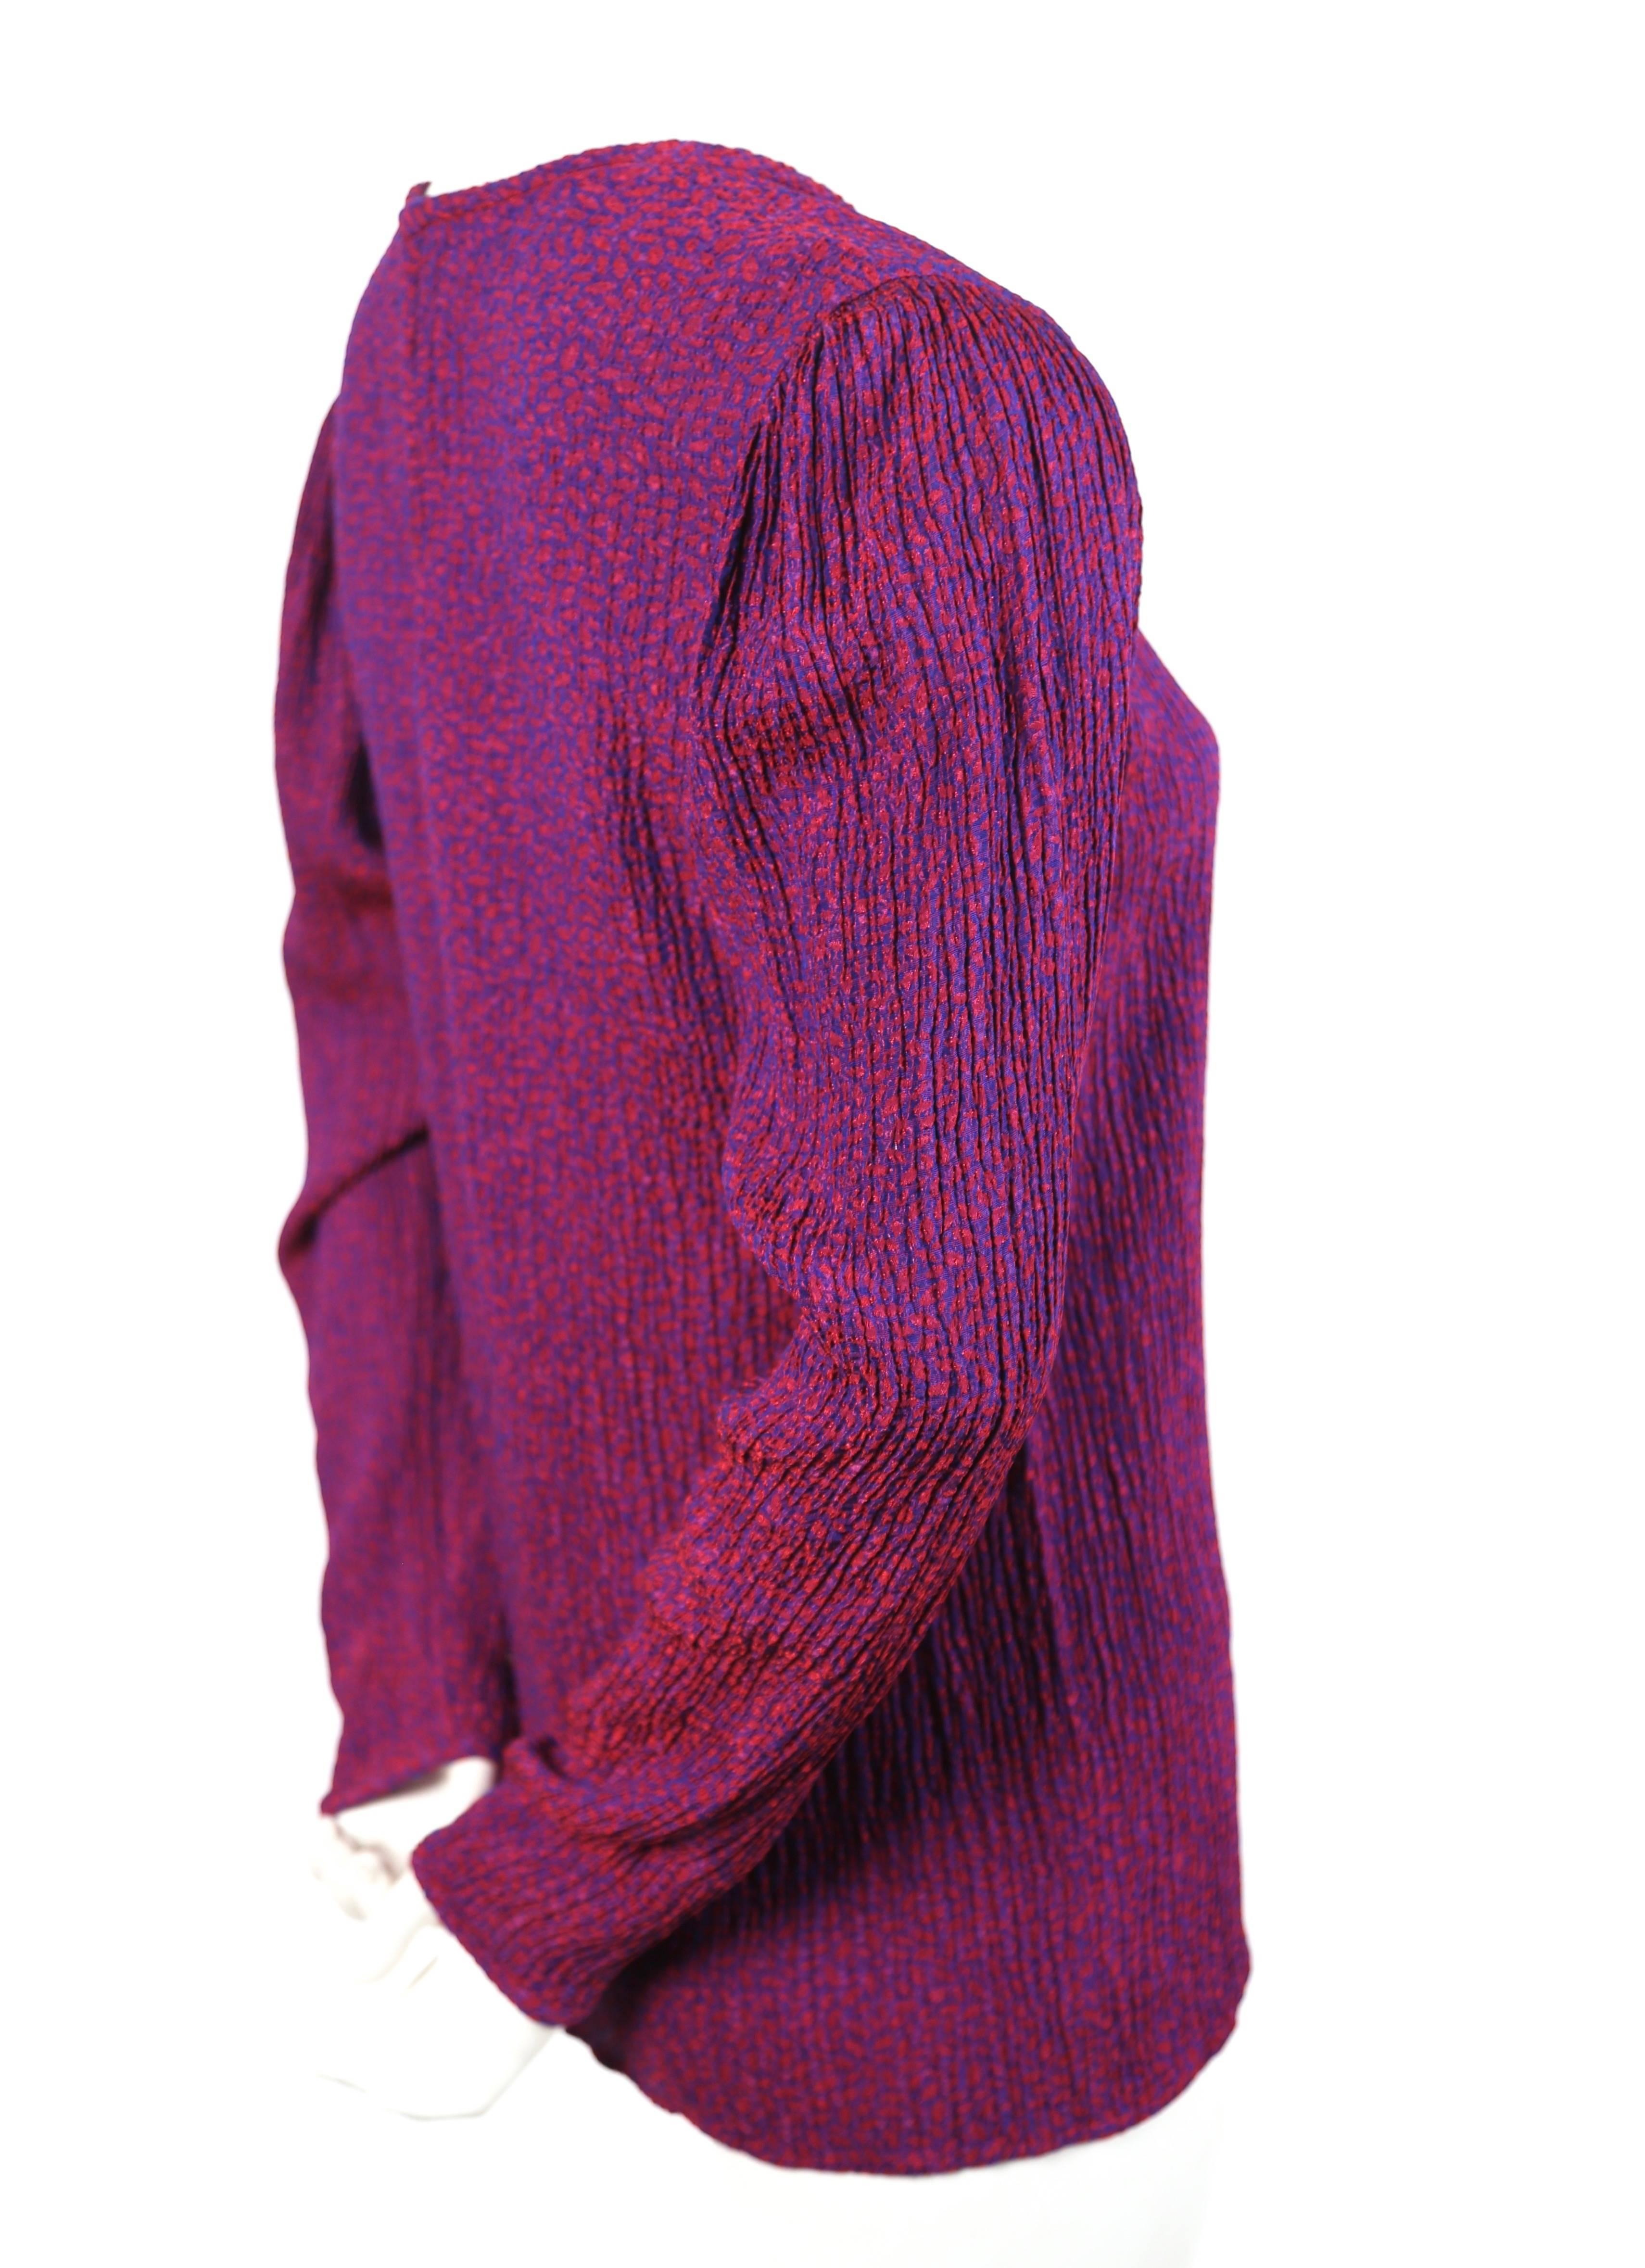 purple plisse top